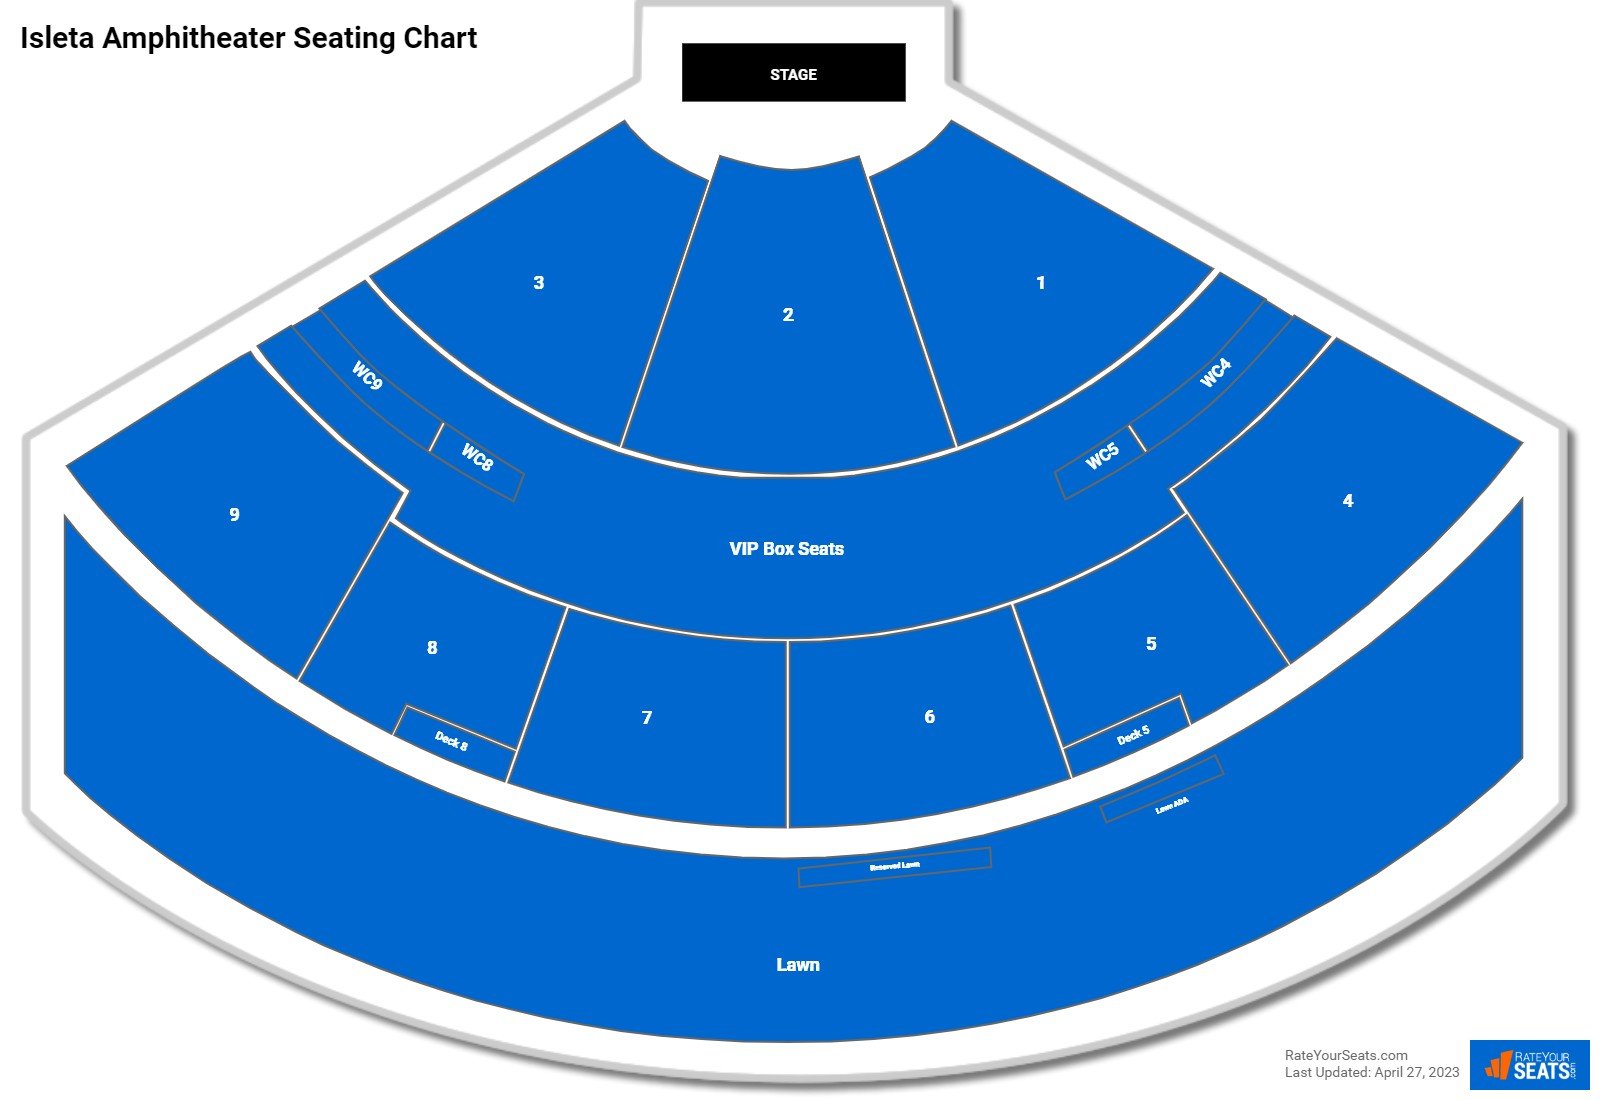 Isleta Amphitheater Concert Seating Chart